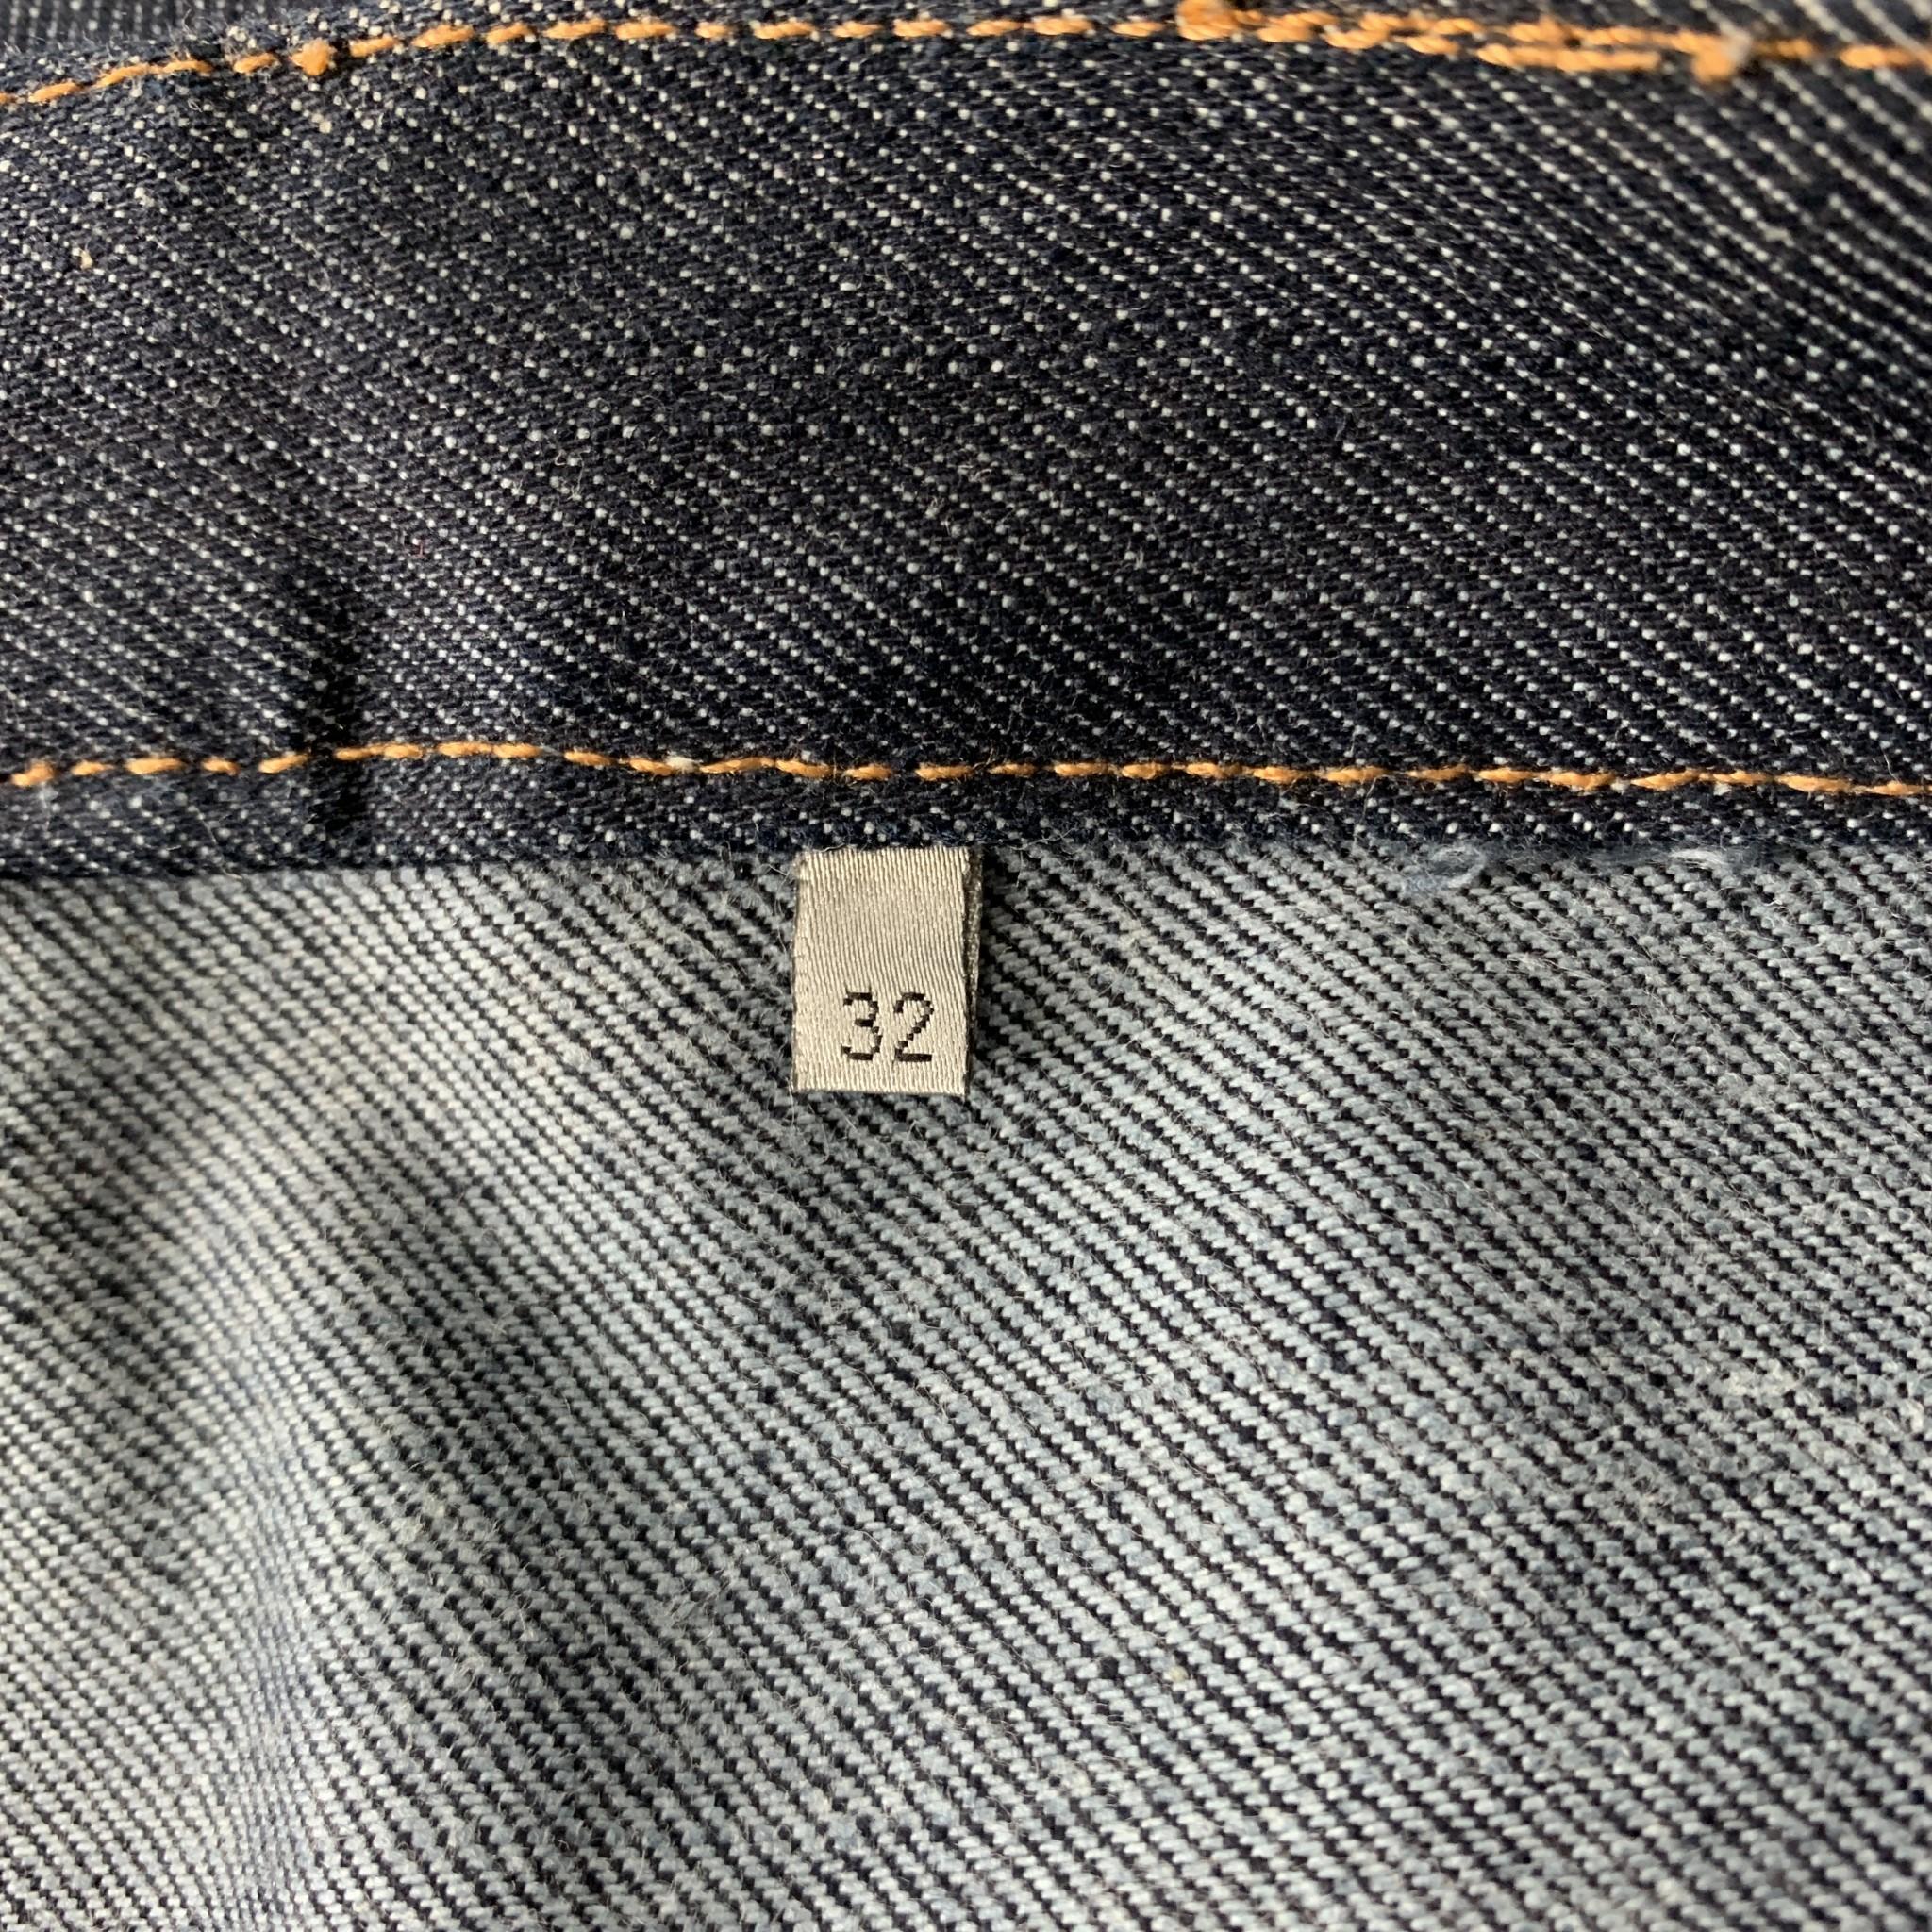 mens contrast stitch jeans